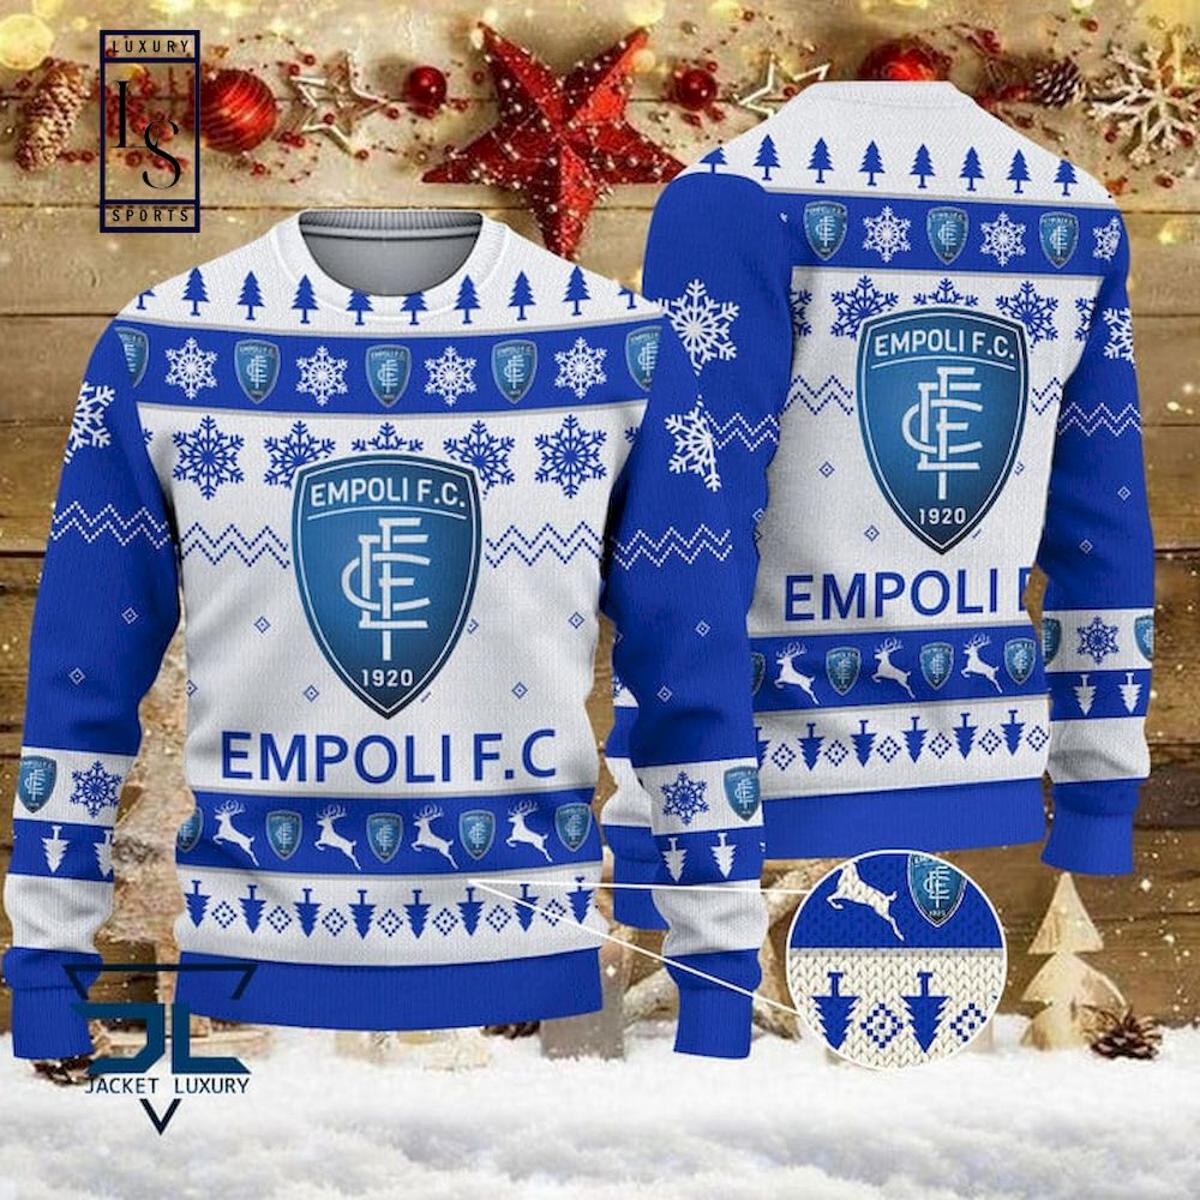 Us Sassuolo Calcio Santa Hat Best Ugly Christmas Sweater